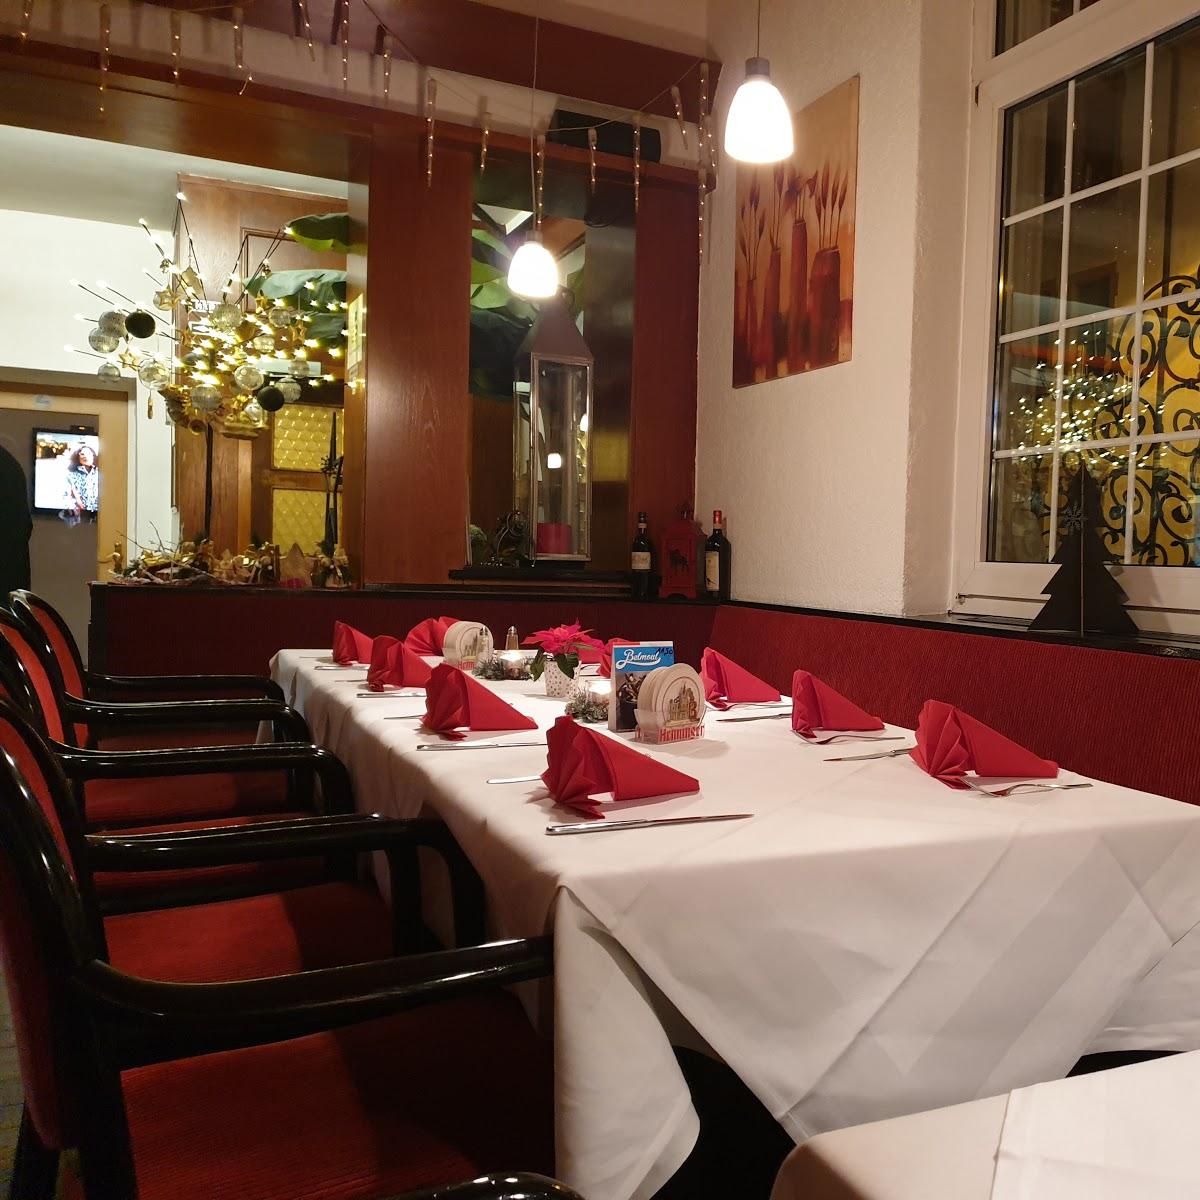 Restaurant "Due Diavoli" in Frankfurt am Main